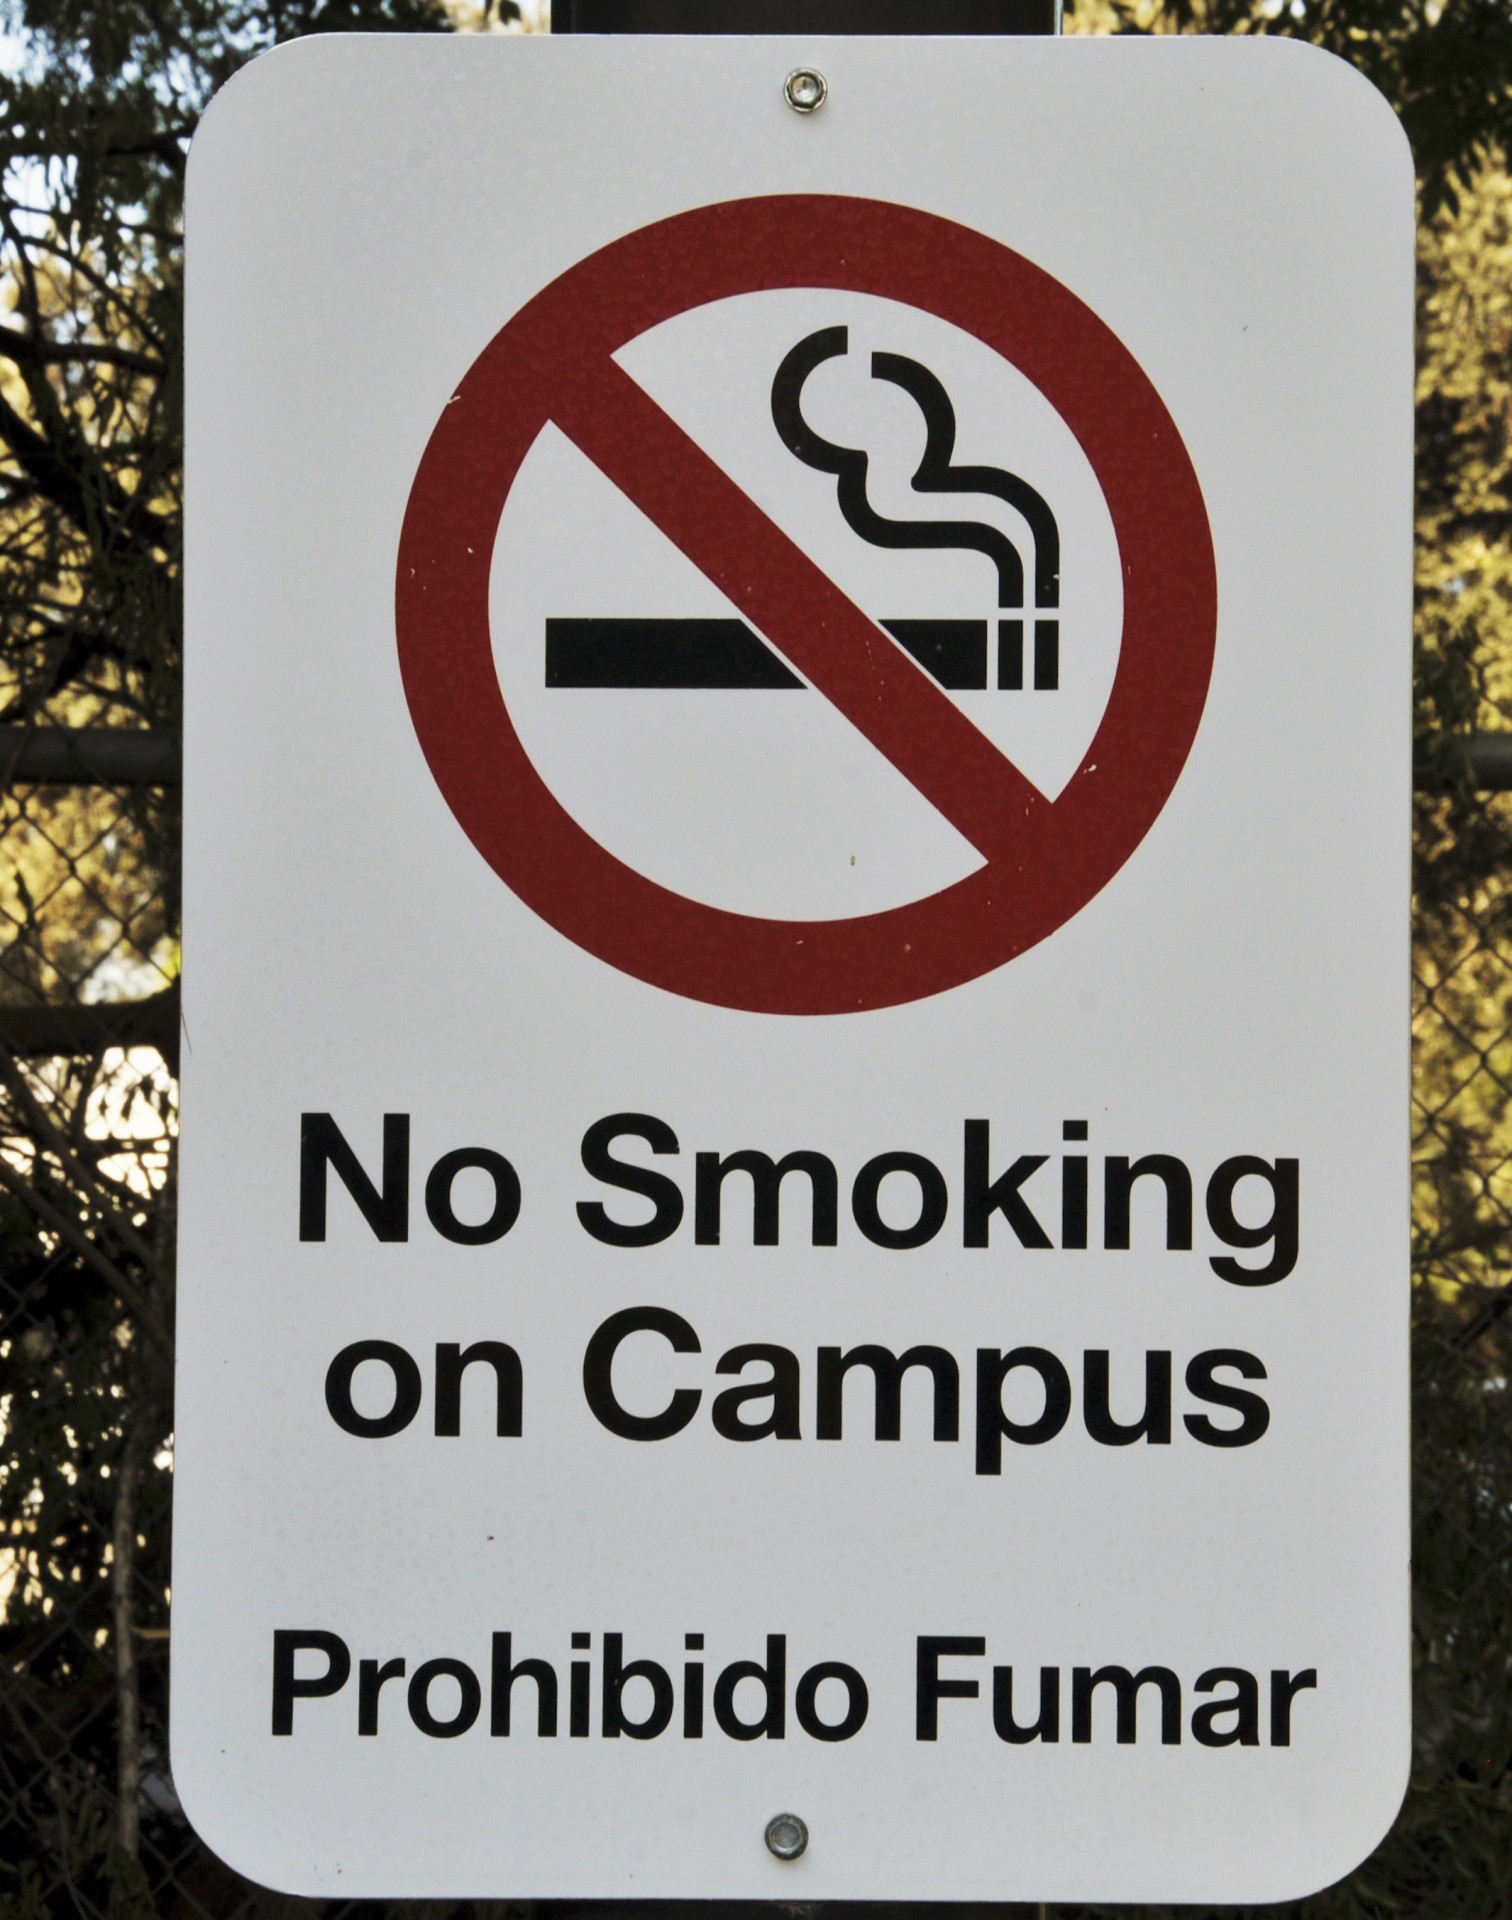 No smoking sign,no smoking,smoking,cigarettes,health - free image from needpix.com